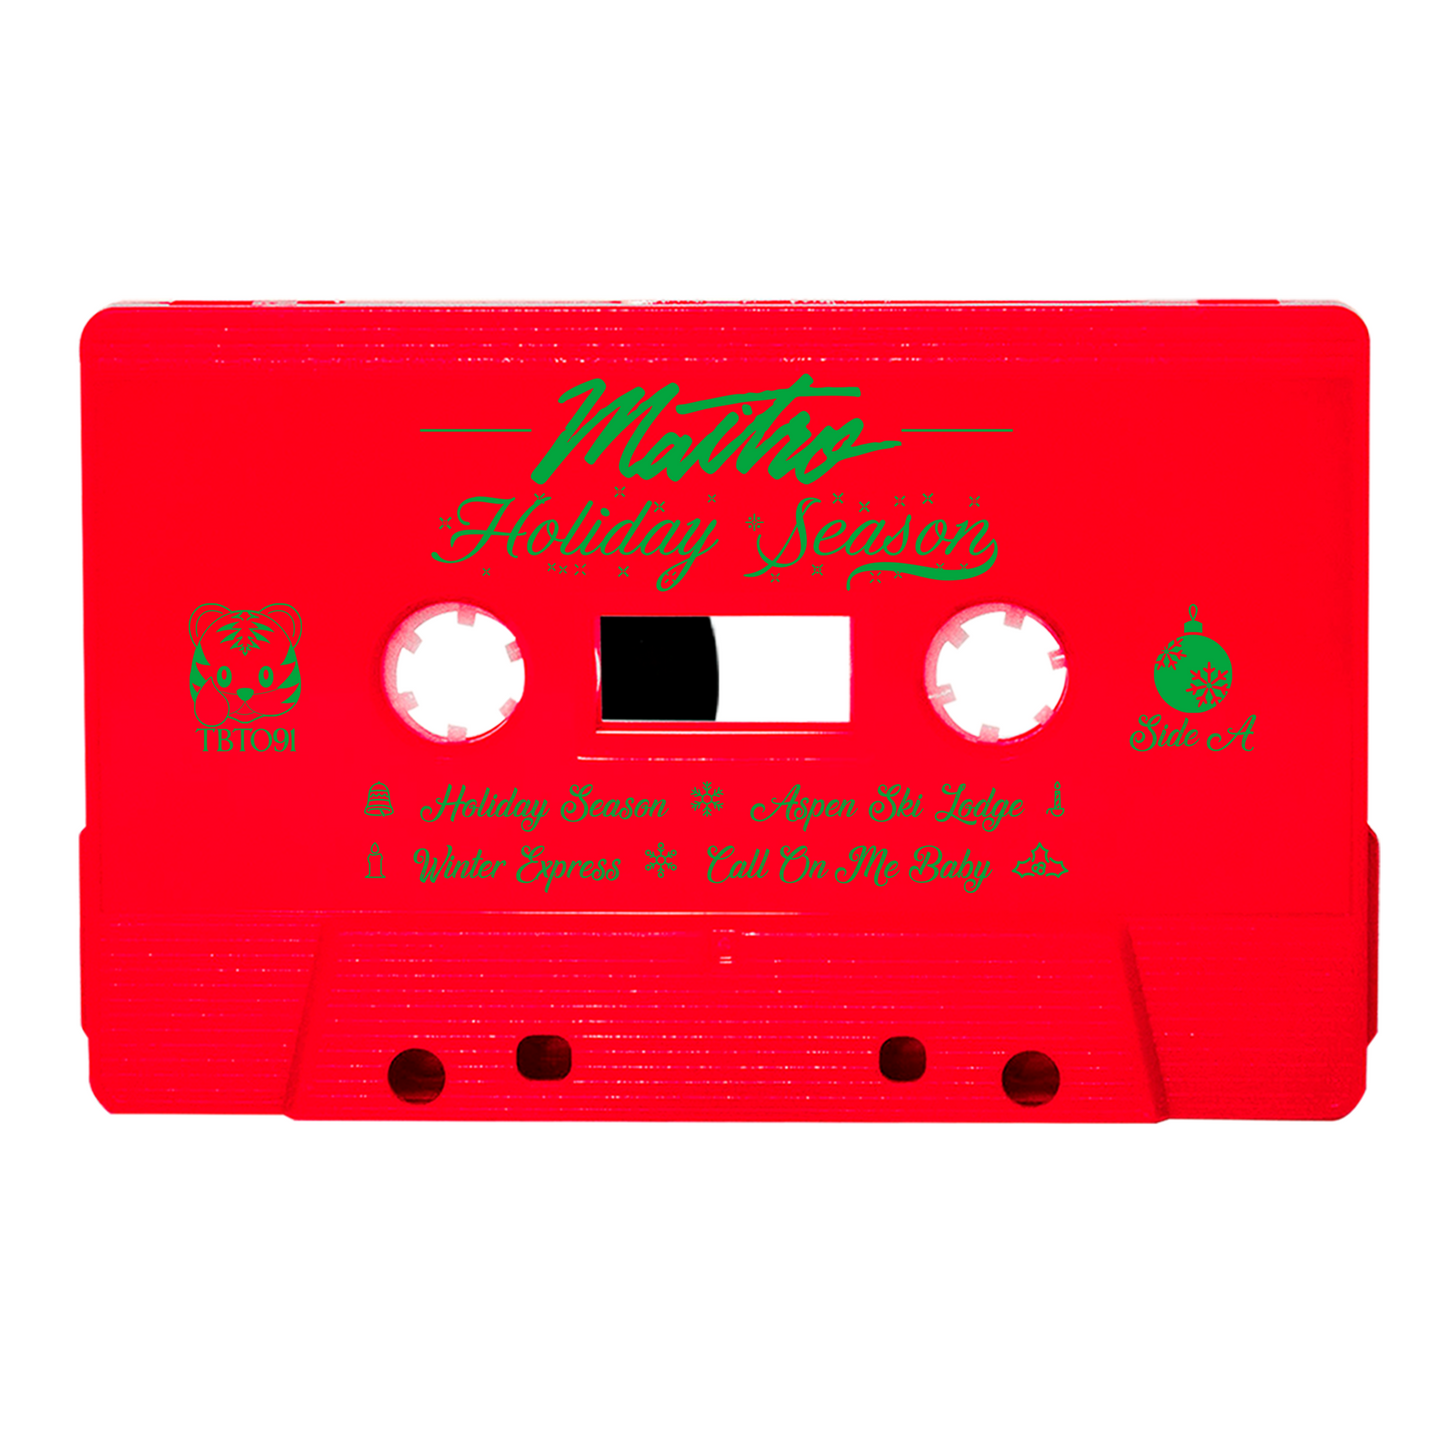 Maitro - "Holiday Season" Limited Edition Cassette Tape